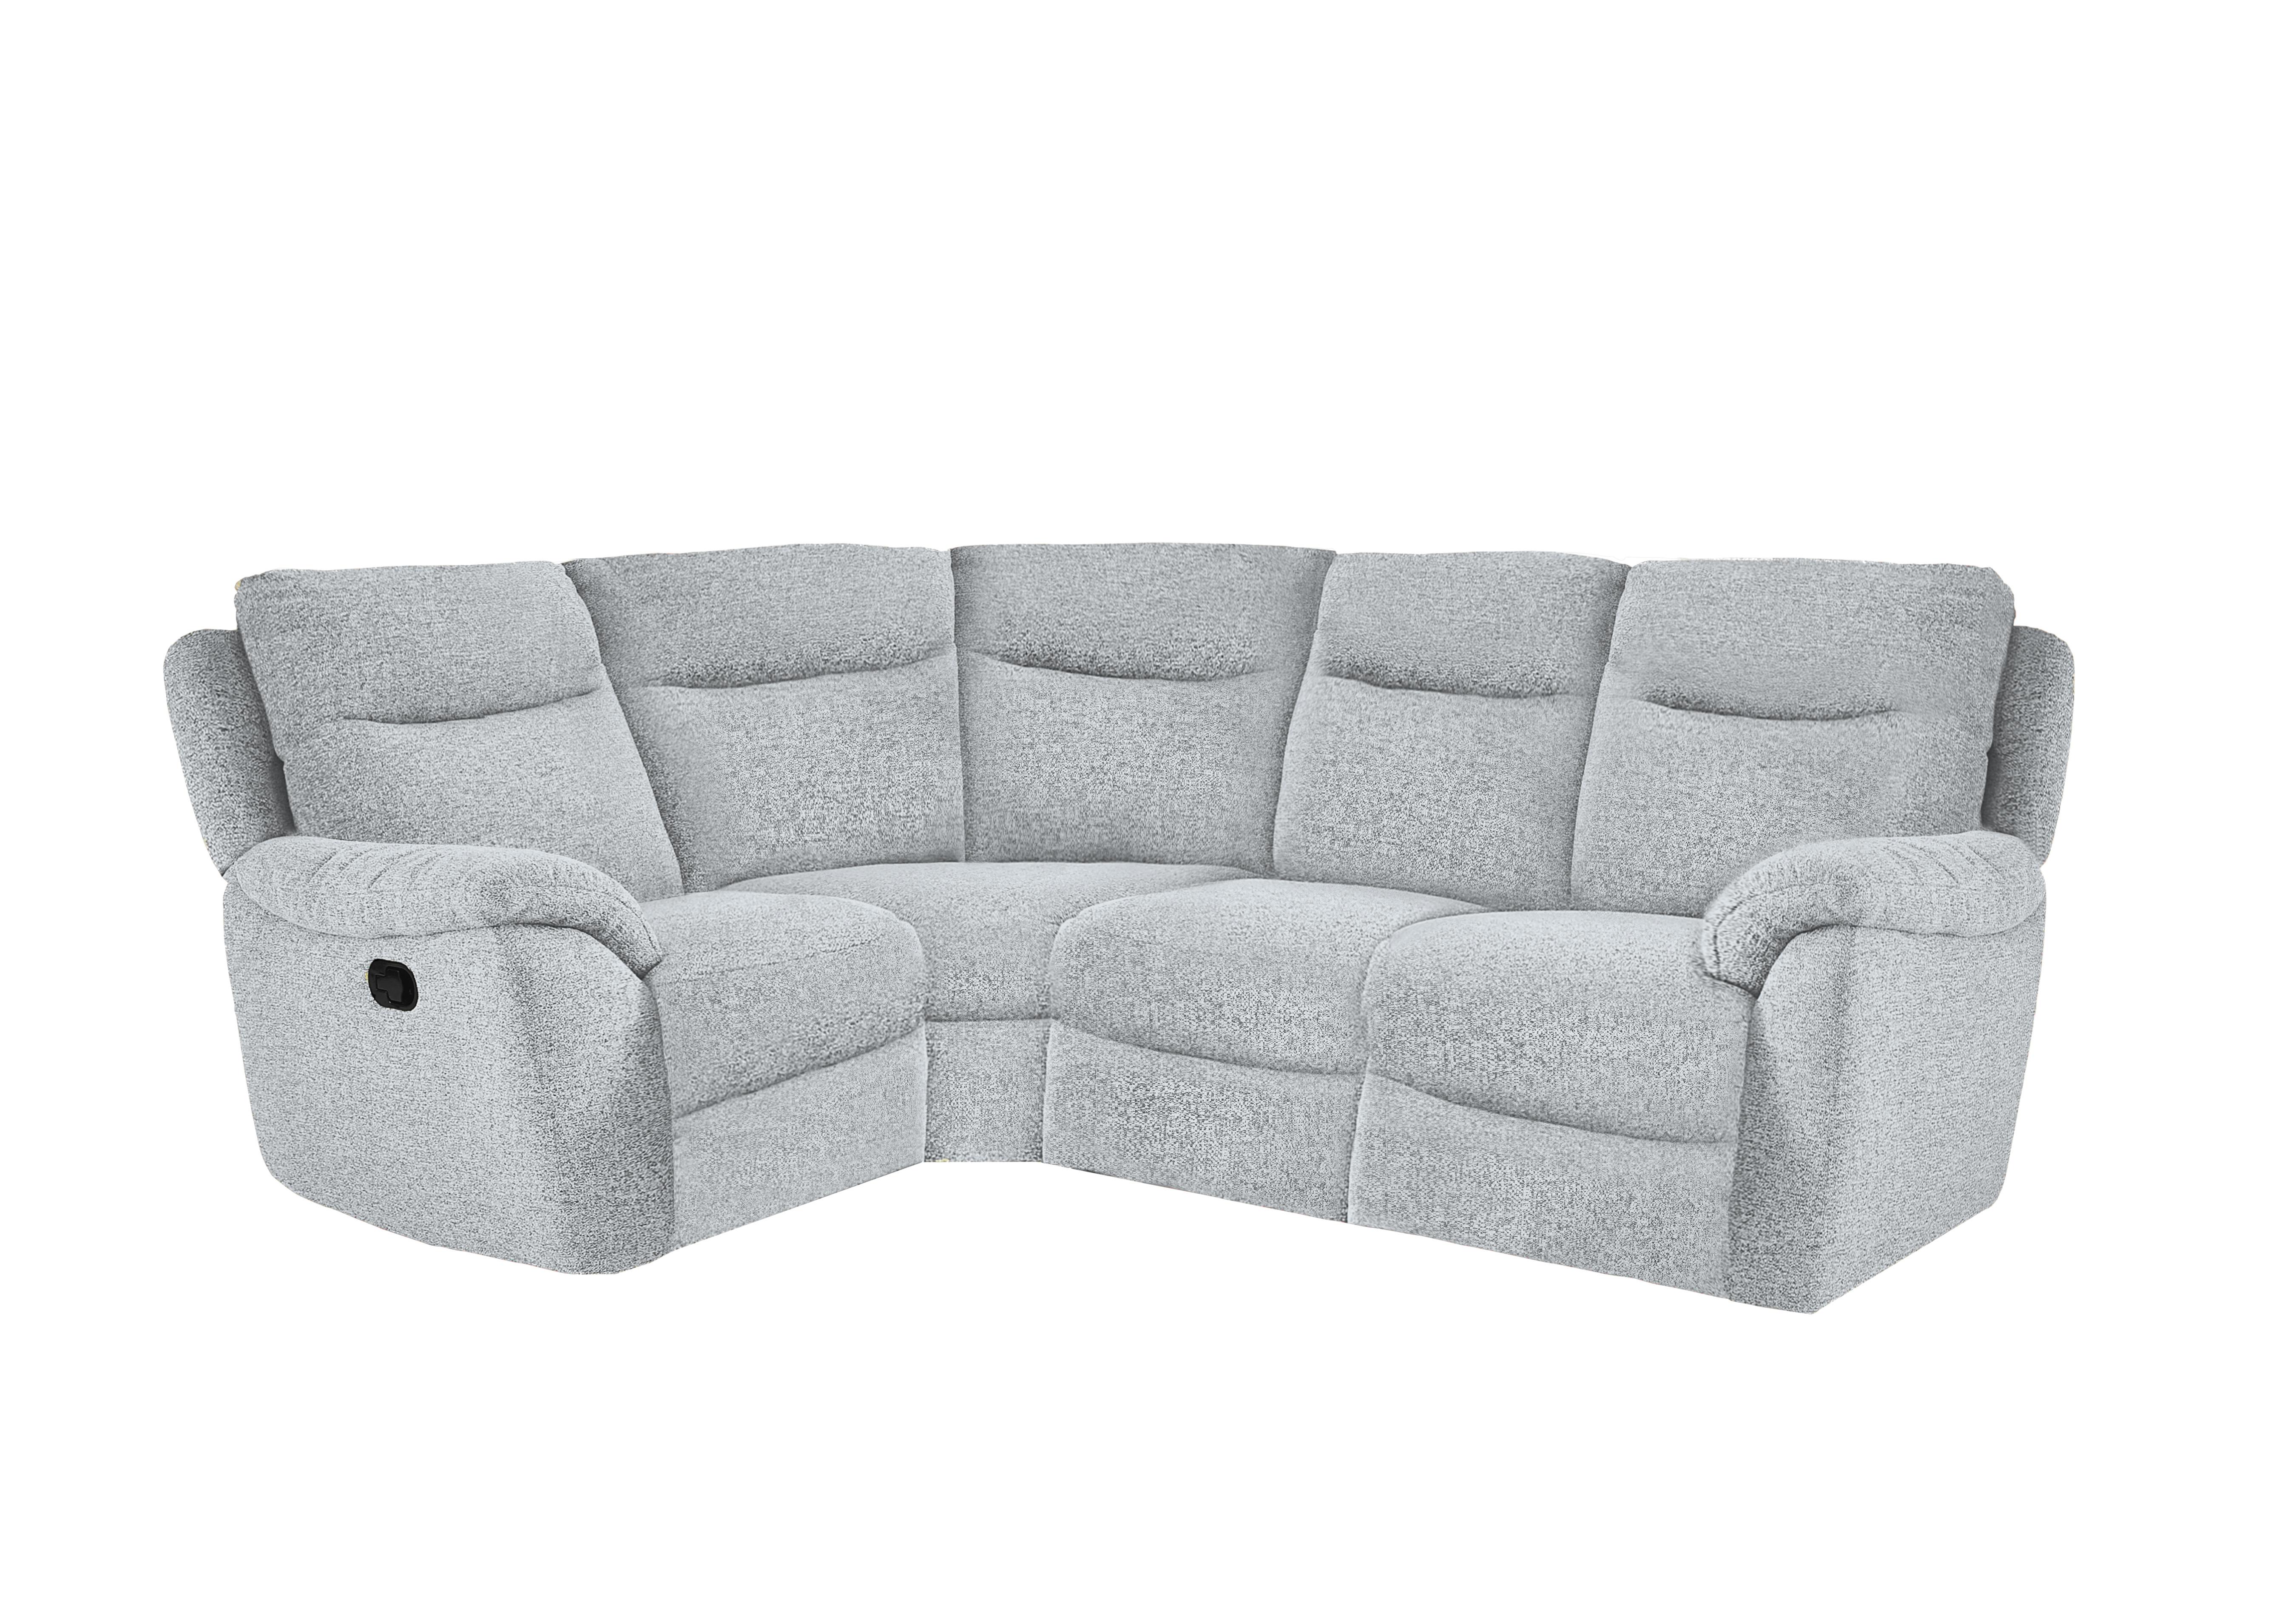 Snug Compact Fabric Corner Sofa in Fab-Chl-R21 Frost on Furniture Village